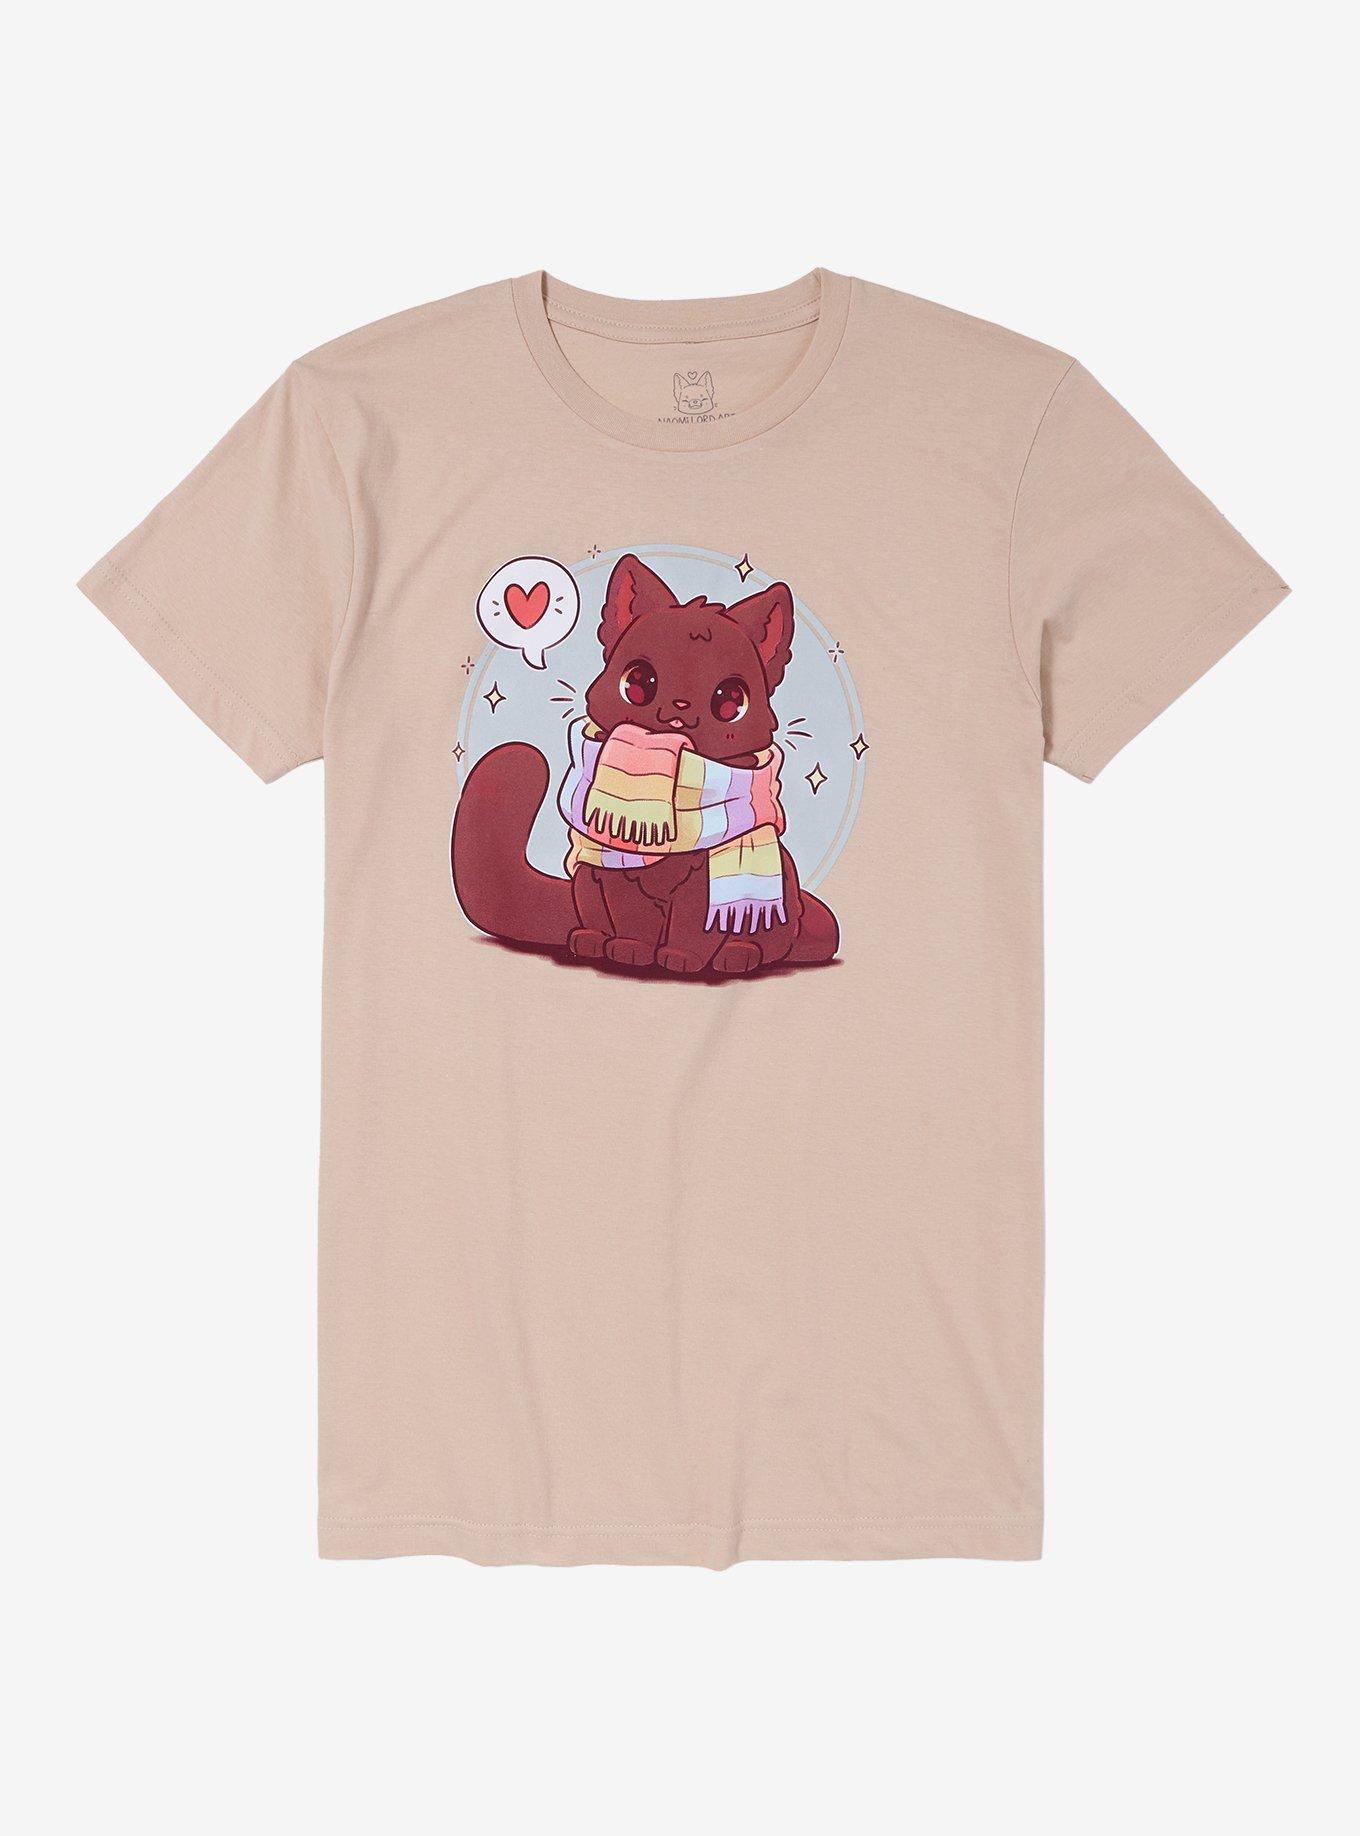 Cat Rainbow Scarf T-Shirt By Naomi Lord Art, NATURAL, hi-res